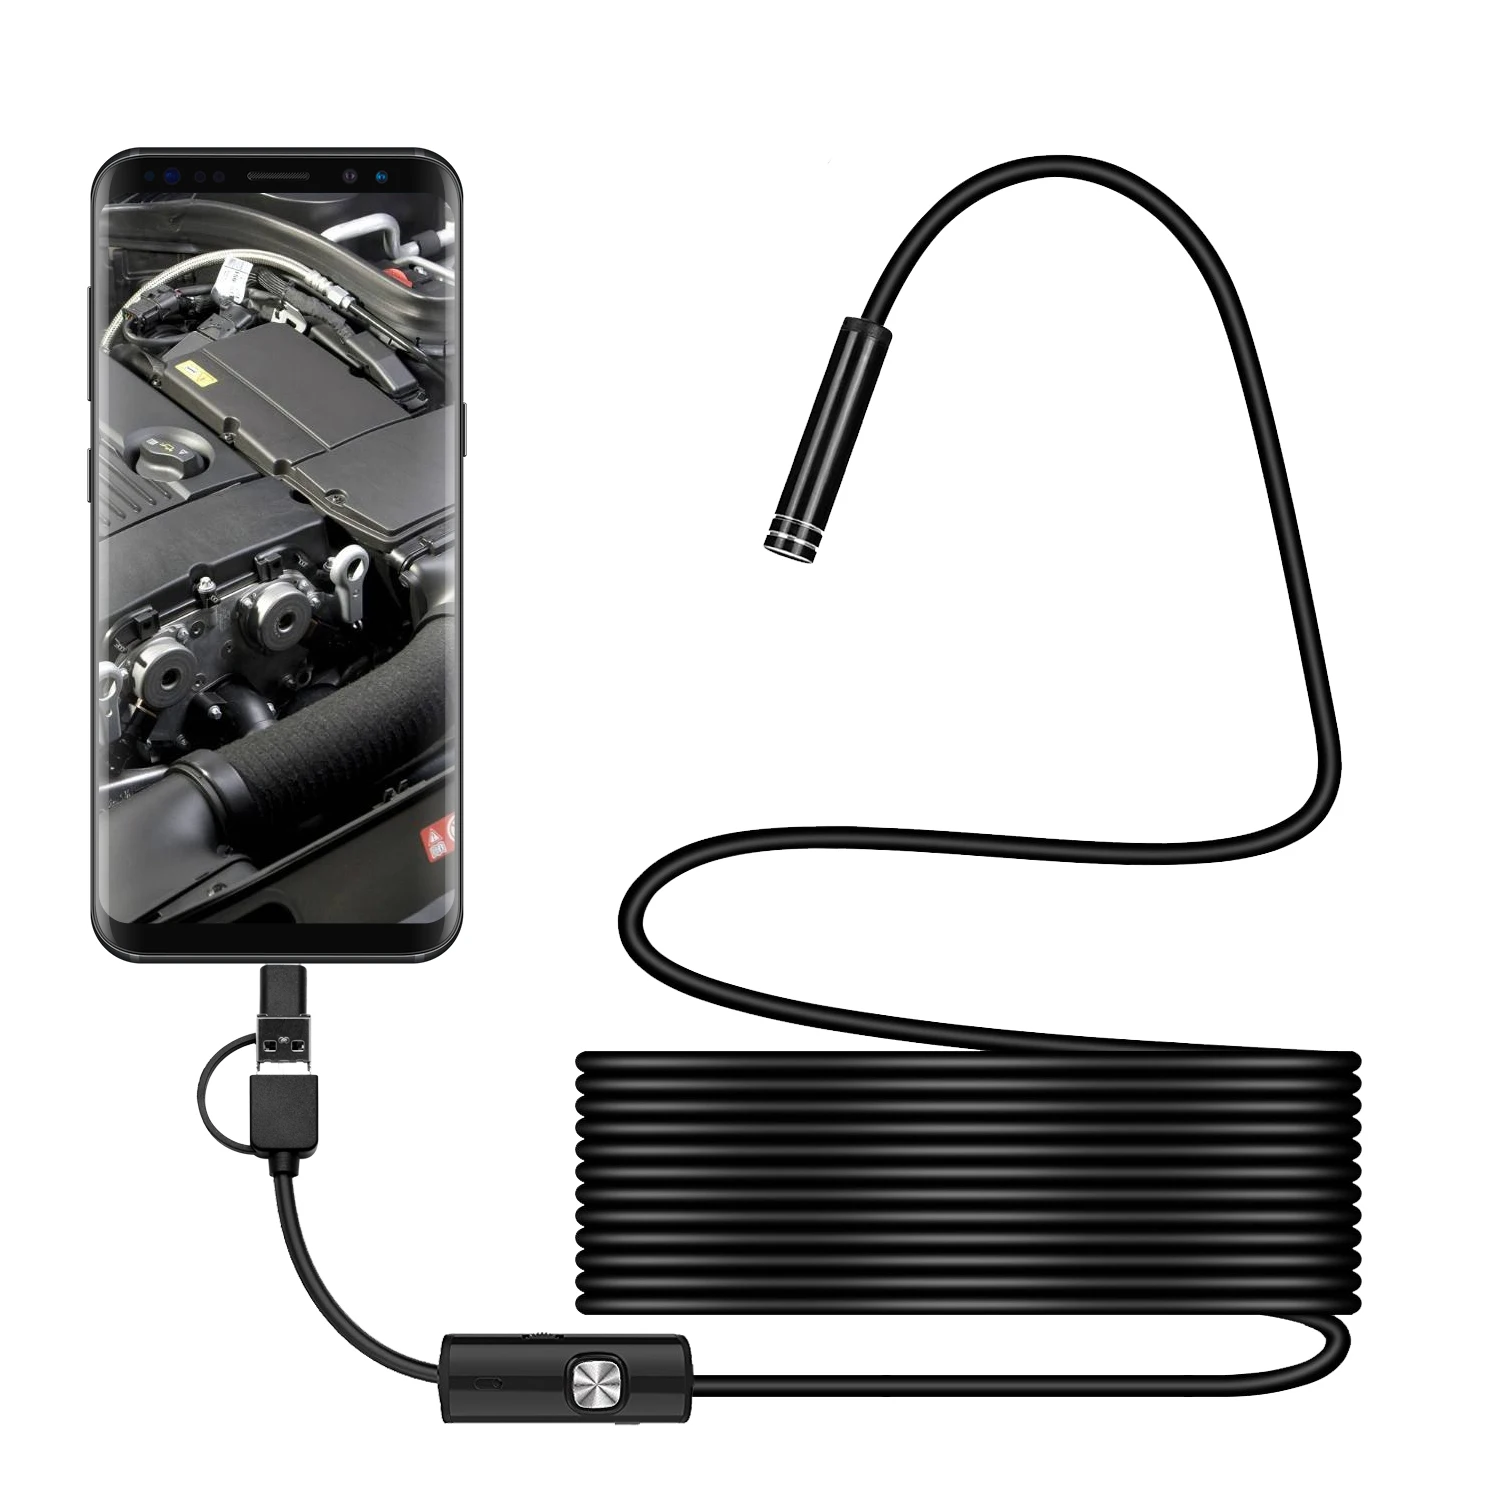 Камера гибкая для телефона с подсветкой. Эндоскоп 3.5м Deko we-3.5. USB камера эндоскоп для андроид. USB Camera для эндоскопа. Камера - гибкий эндоскоп USB (Micro USB), 2м, Android/PC.